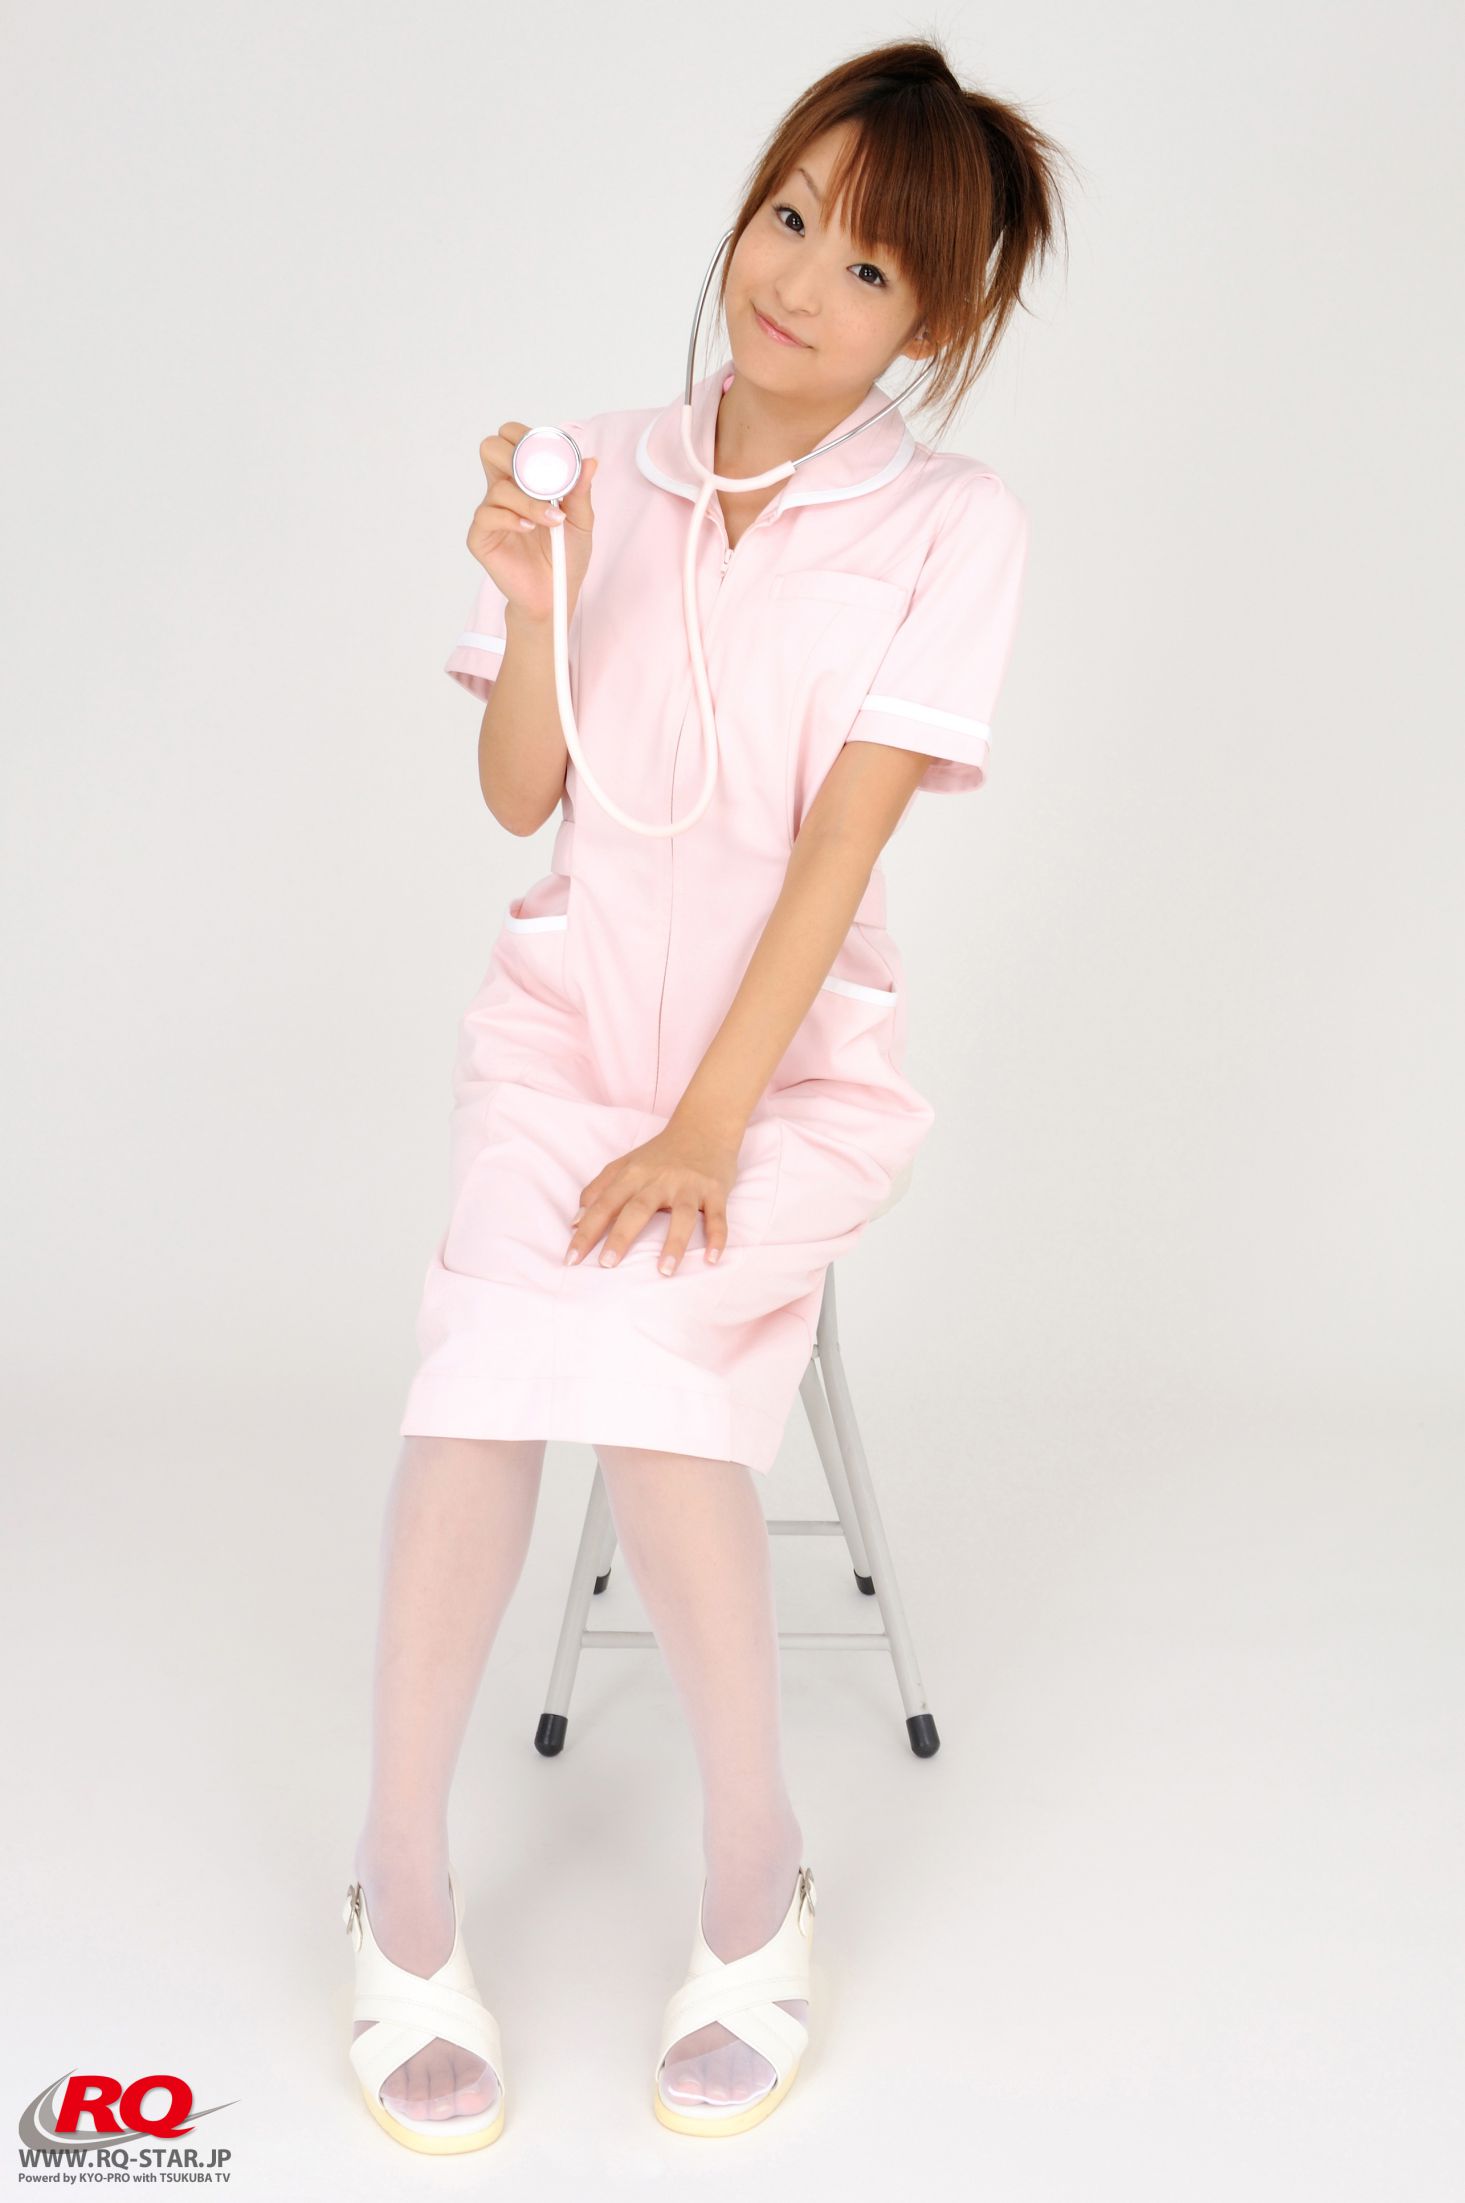 [Rq-star] No.00083 Qingmu unclear NURSE COSTUME nurse clothing series